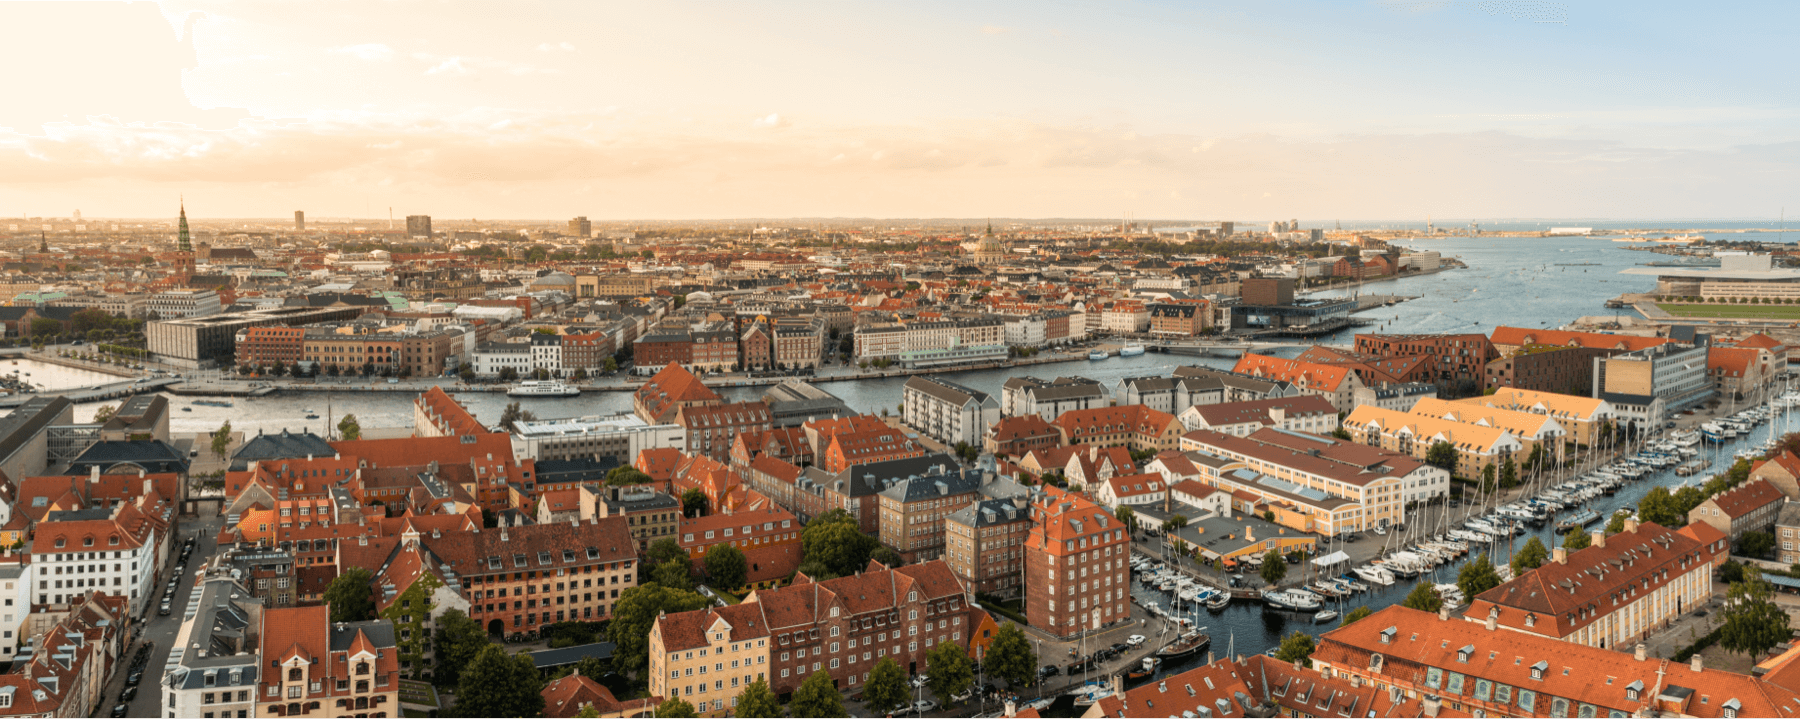 Danish city with river running through it